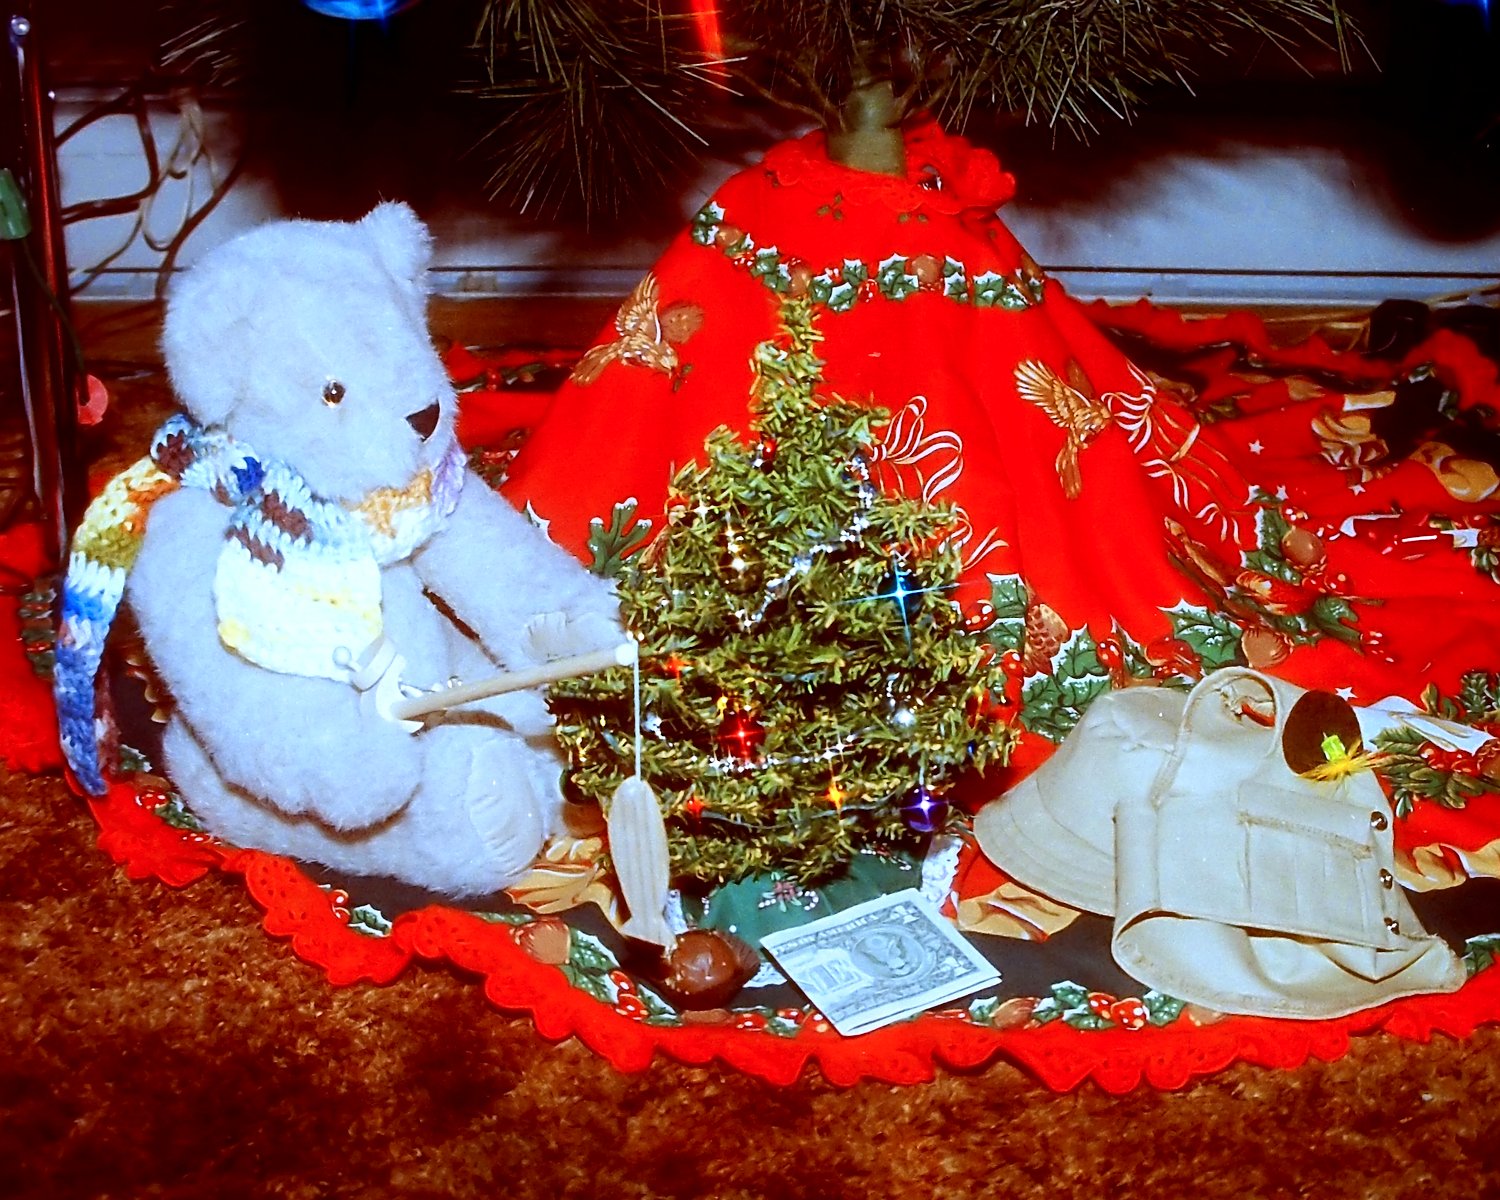 Theodore's 1st Christmas (1994)